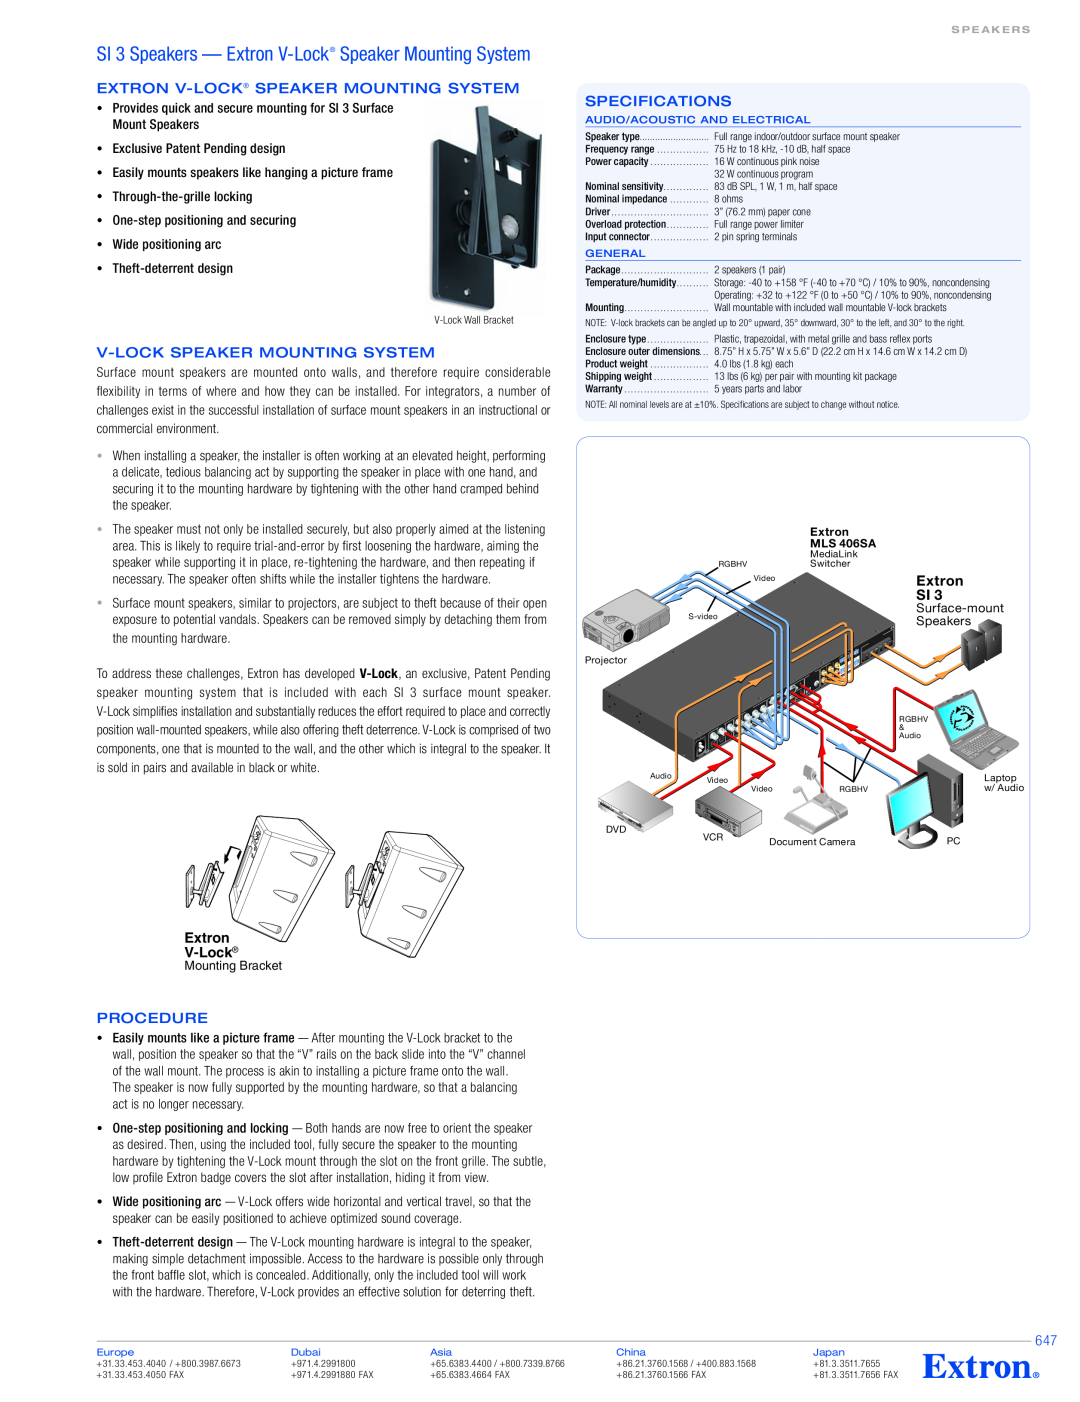 Extron electronic SI 3 Black Extron V-Lock Speaker Mounting System, V-LockSpeaker Mounting System, Procedure, MLS 406SA 